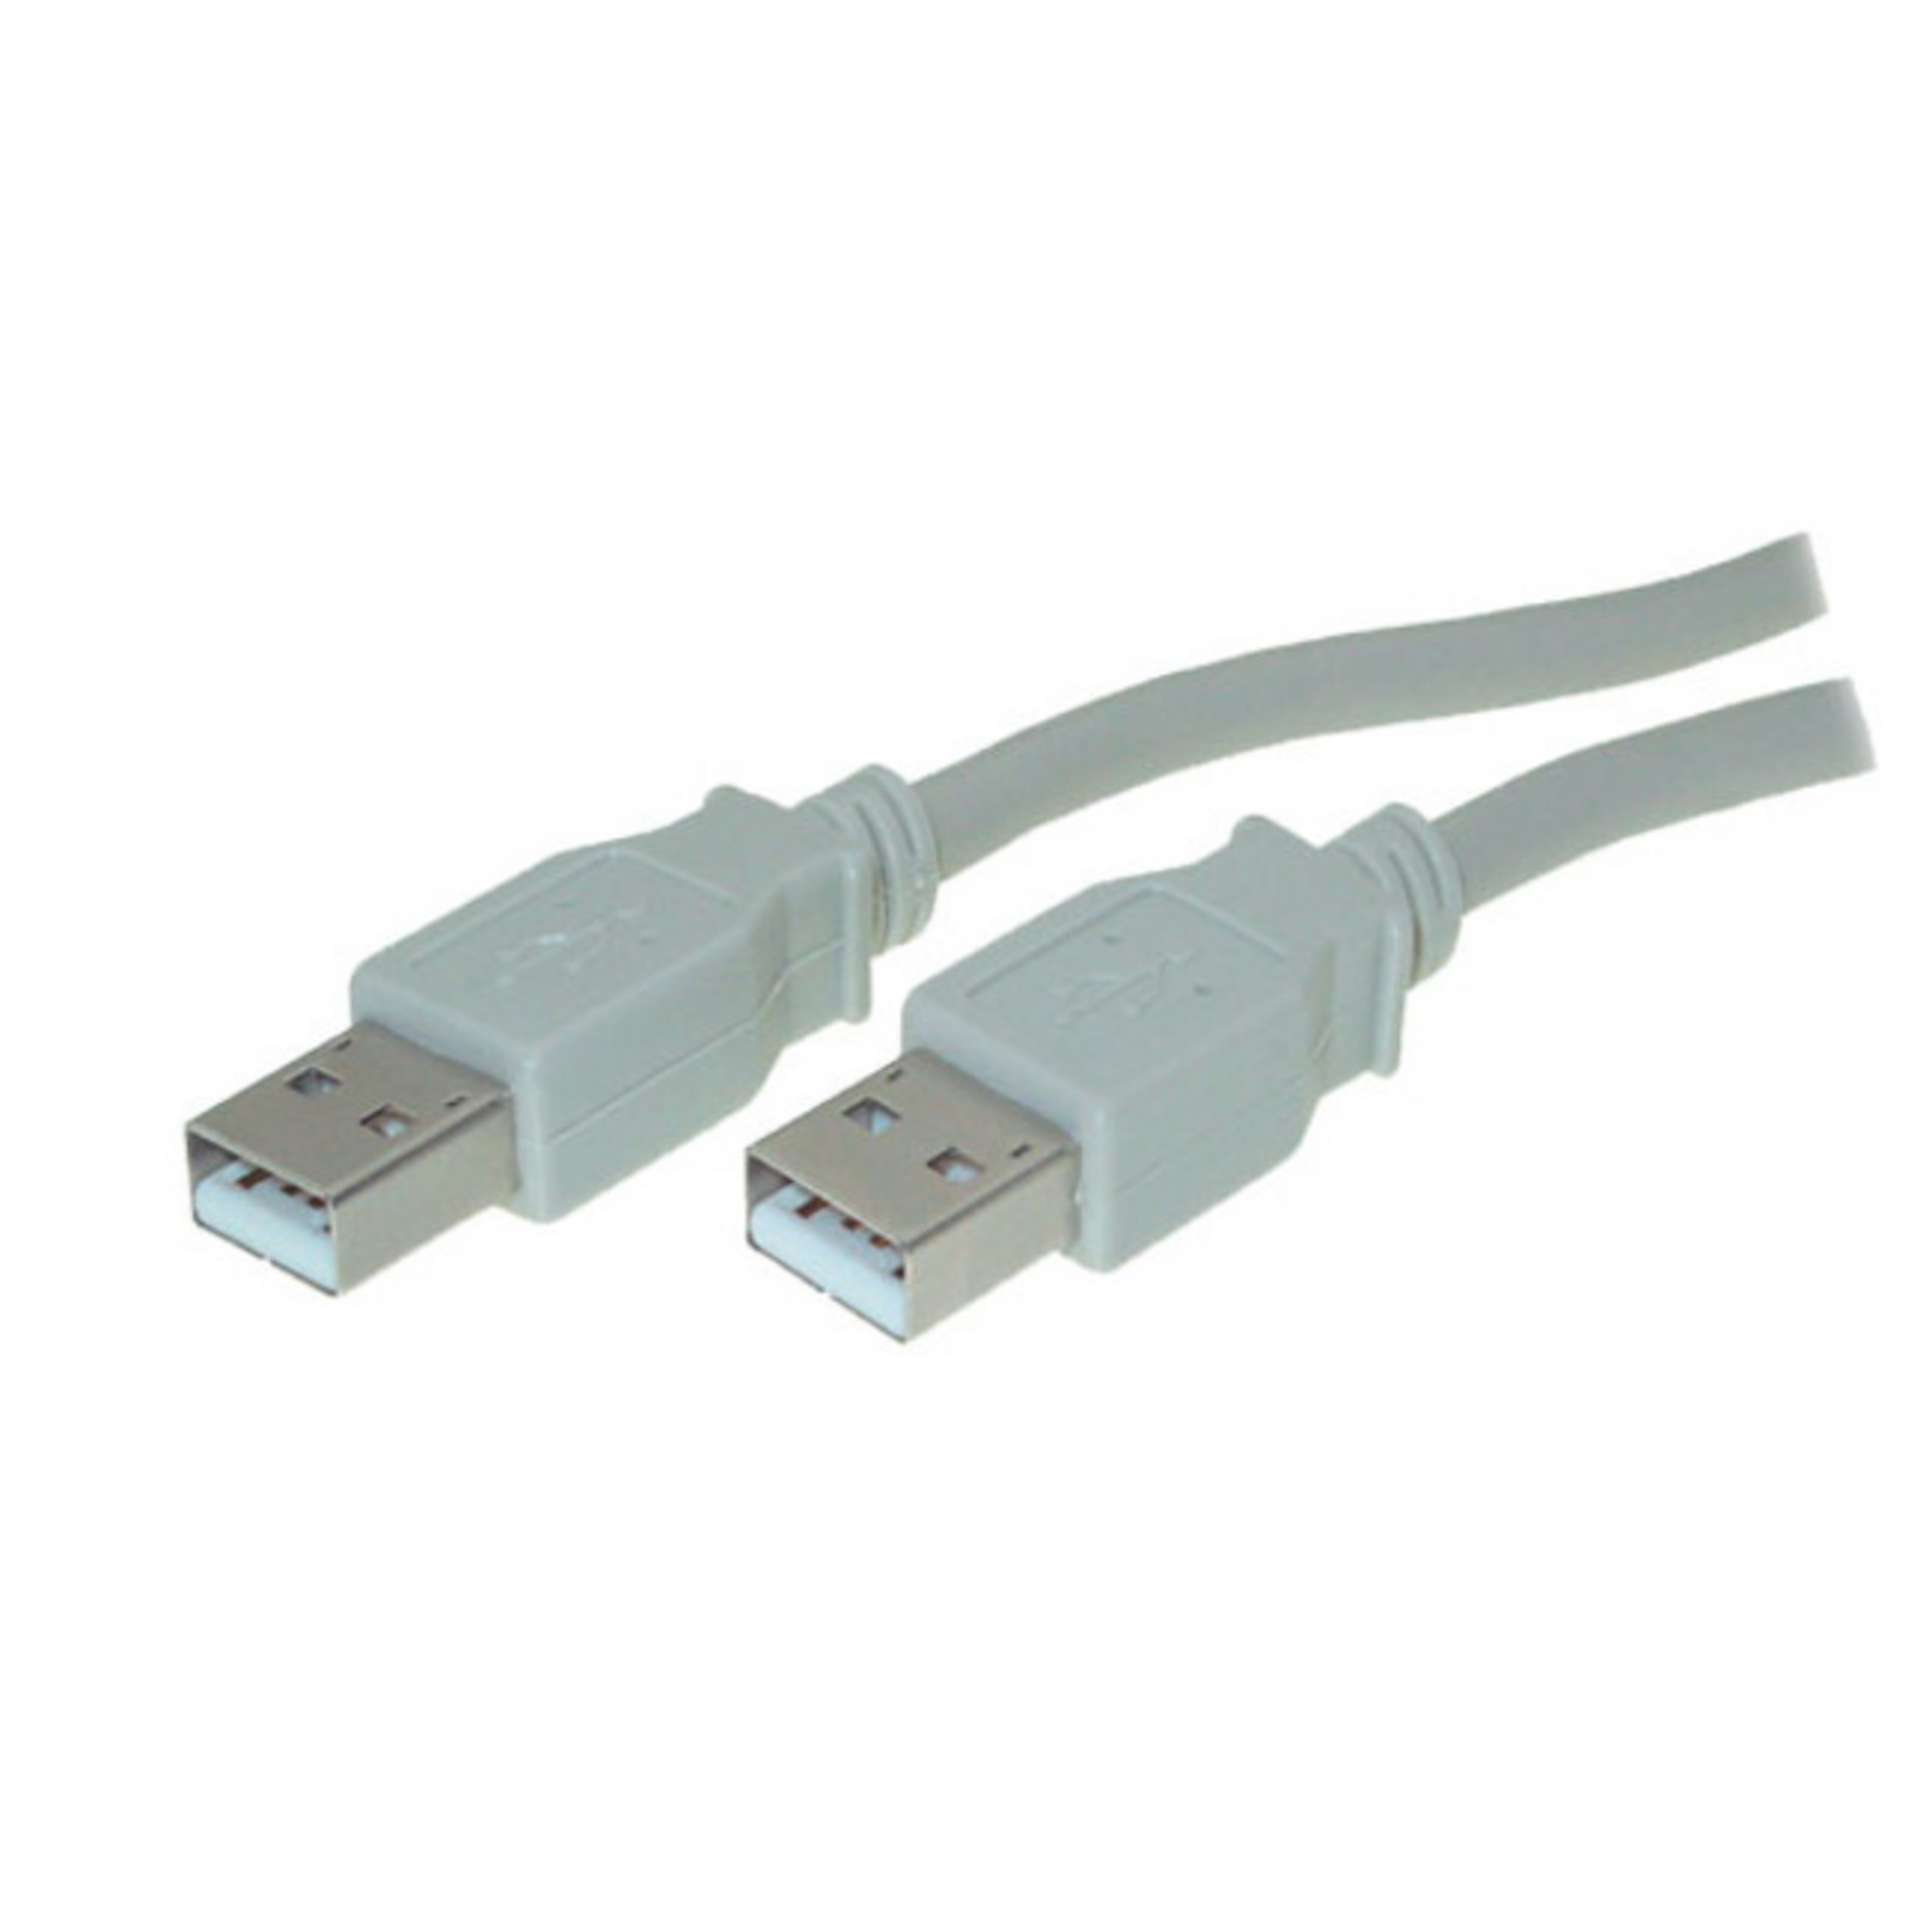 Kabel USB 0,5m Stecker A 2.0 CONNECTIVITY MAXIMUM USB USB Stecker / A S/CONN Kabel